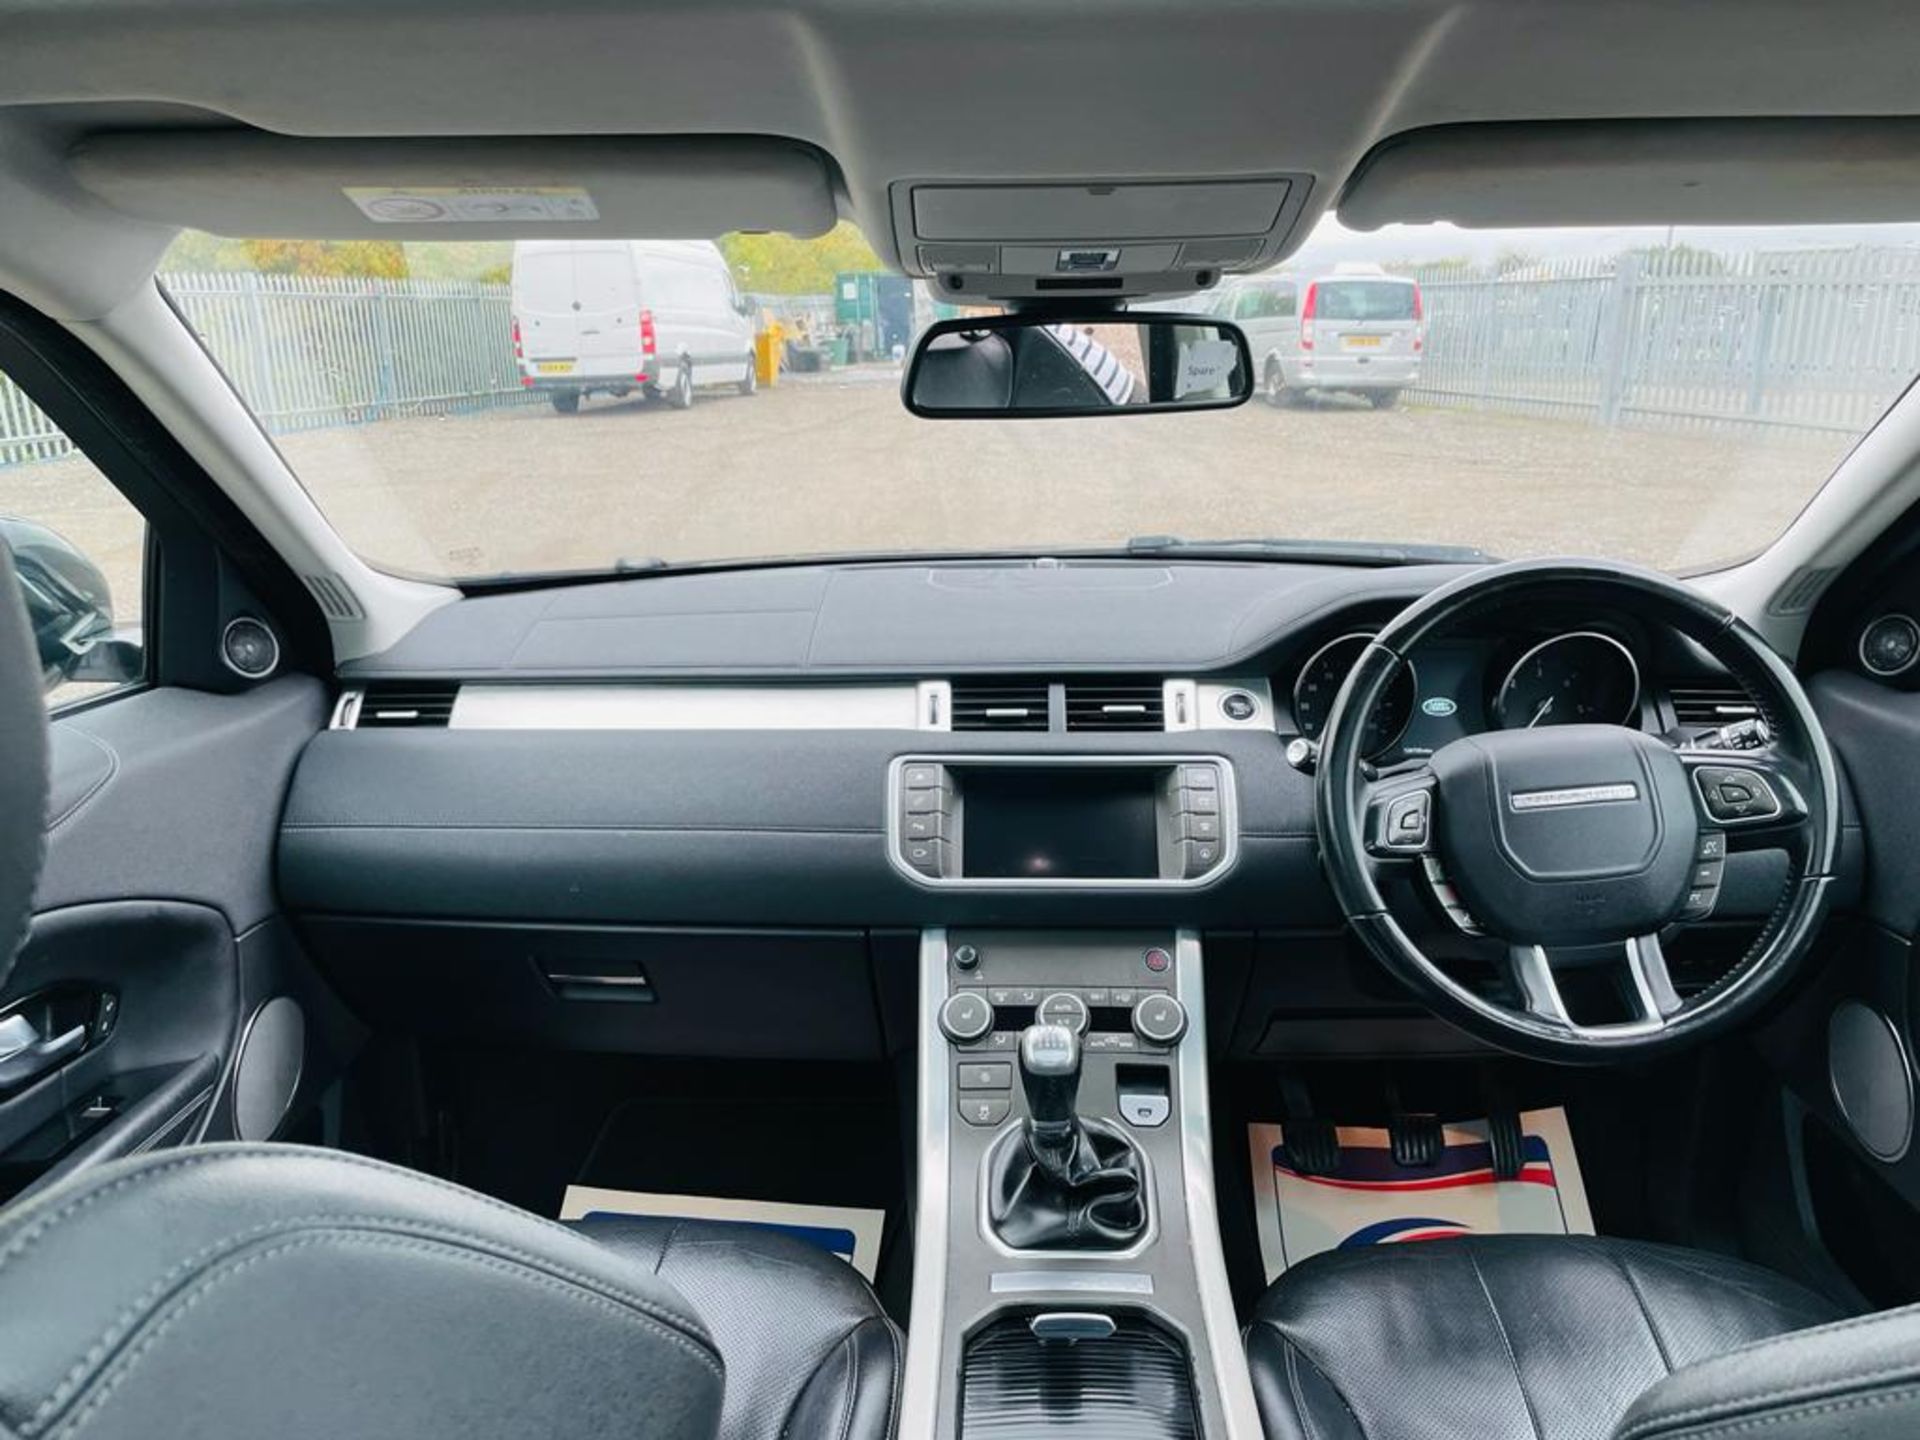 Range Rover Evoque 2.0 ED4 150 SE Tech 2018 '18 Reg' Sat Nav - Panoramic Roof - A/C - ULEZ Compliant - Image 15 of 24